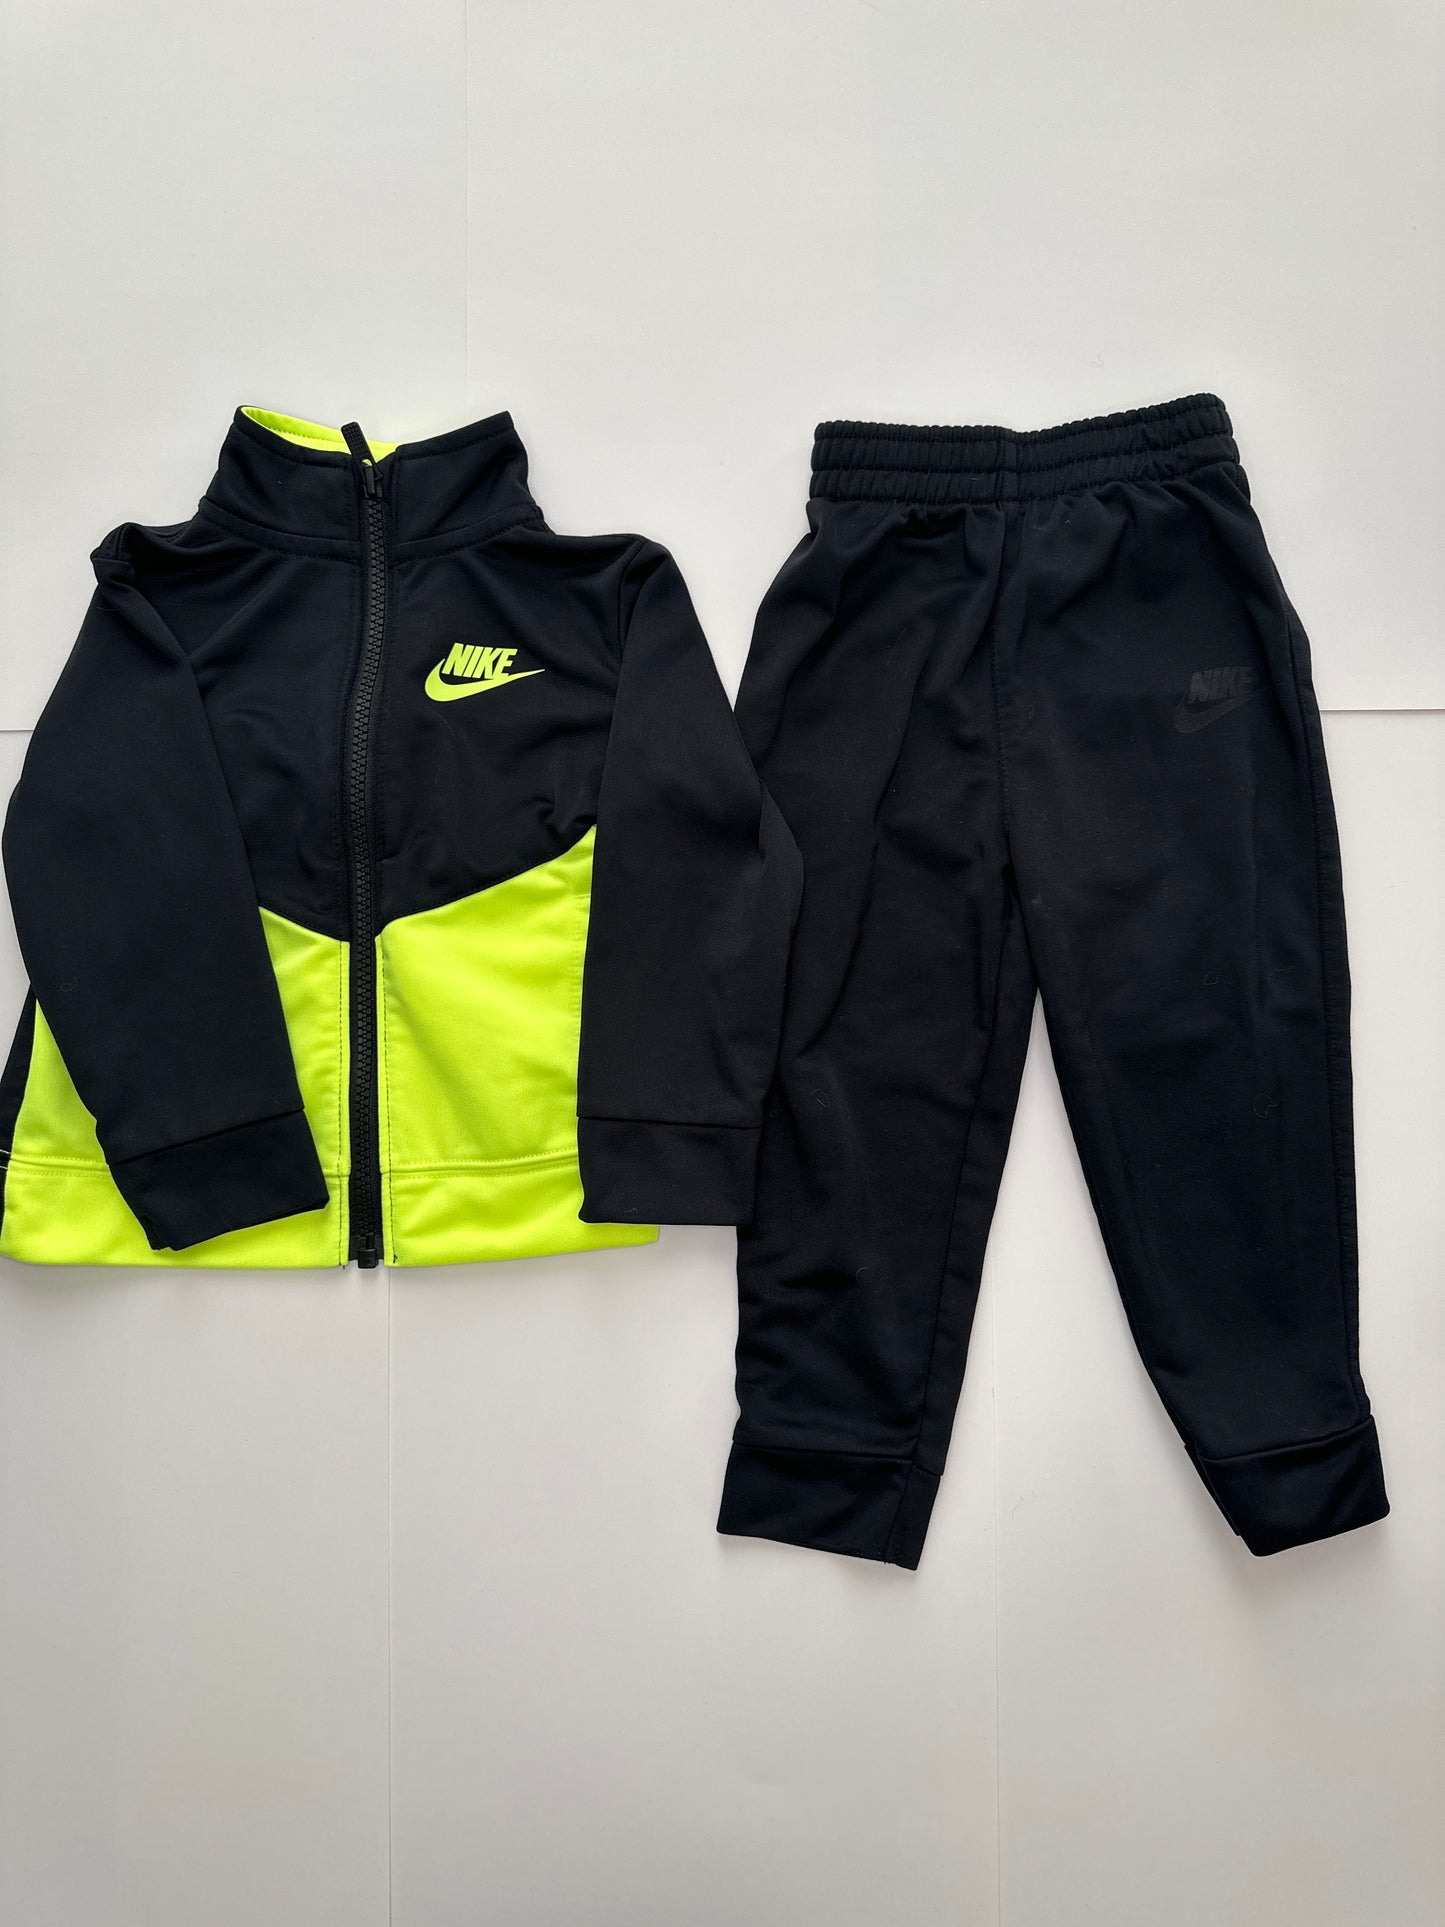 Nike Boys 2T Track Suit